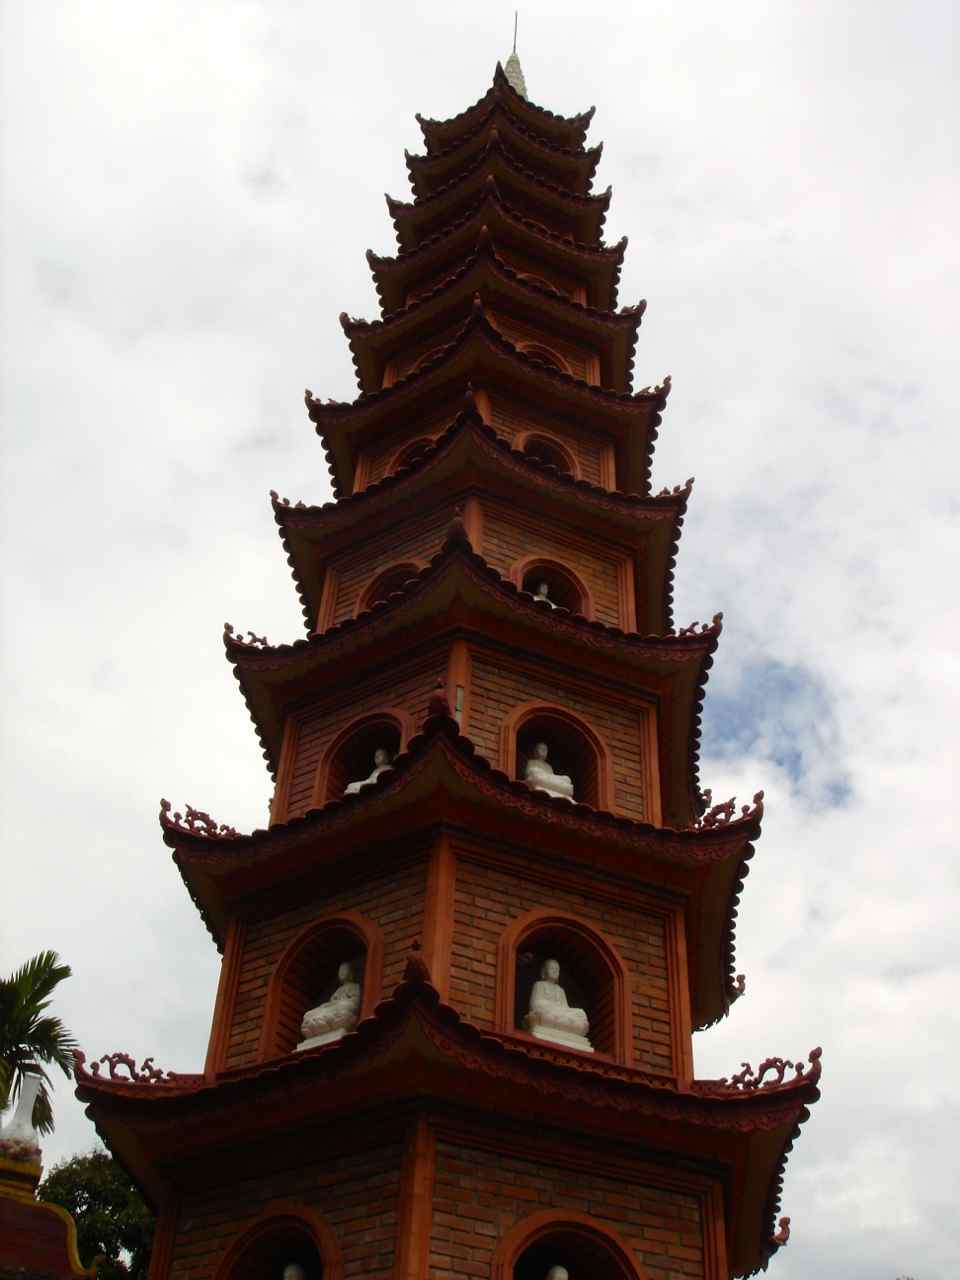 La Pagoda de Tran Quoc en Hanoi (Vietnam)